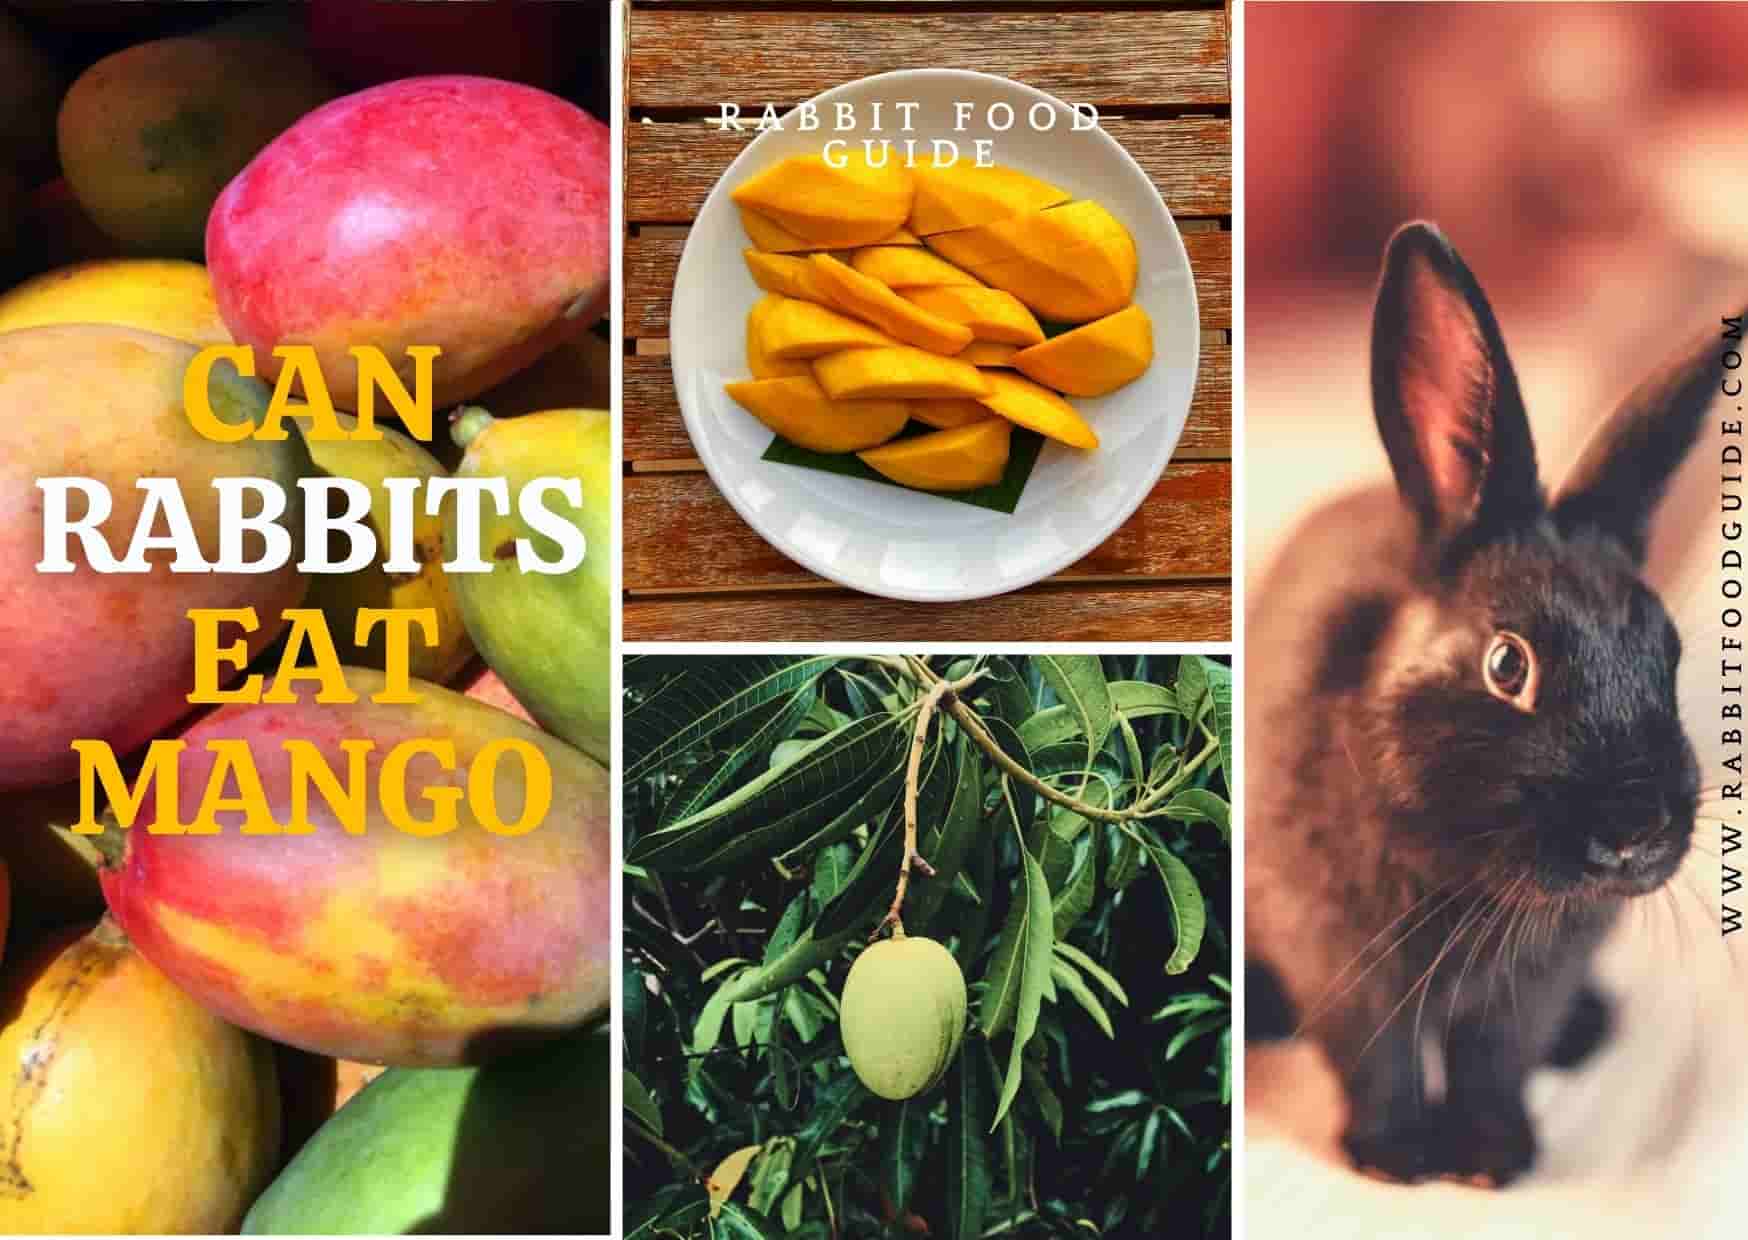 can rabbits eat mango?